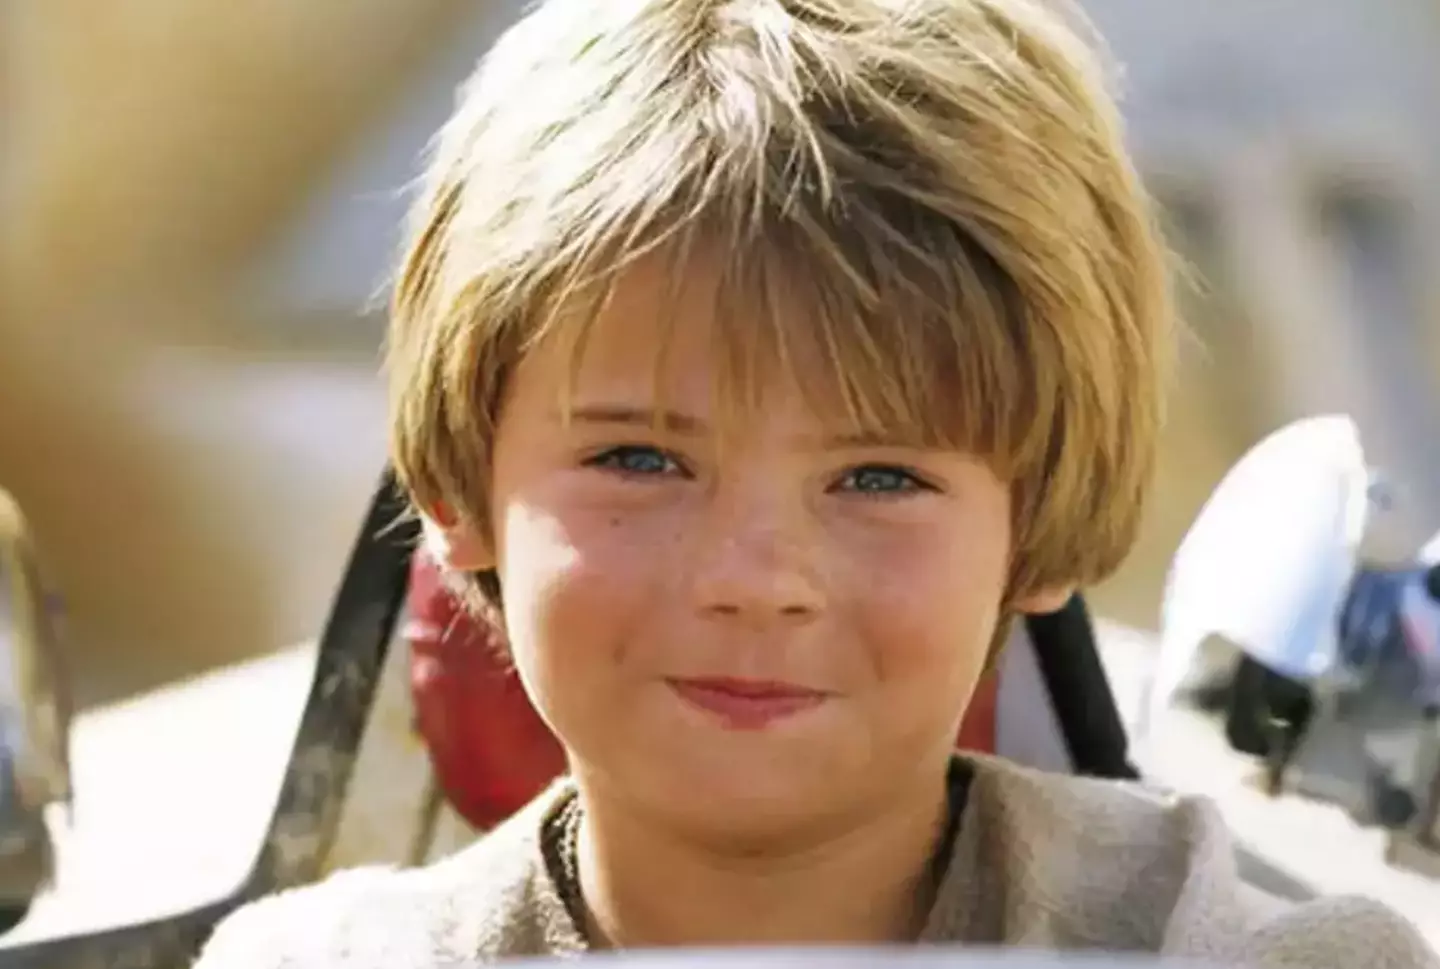 Jake Lloyd played young Anakin Skywalker in Star Wars.